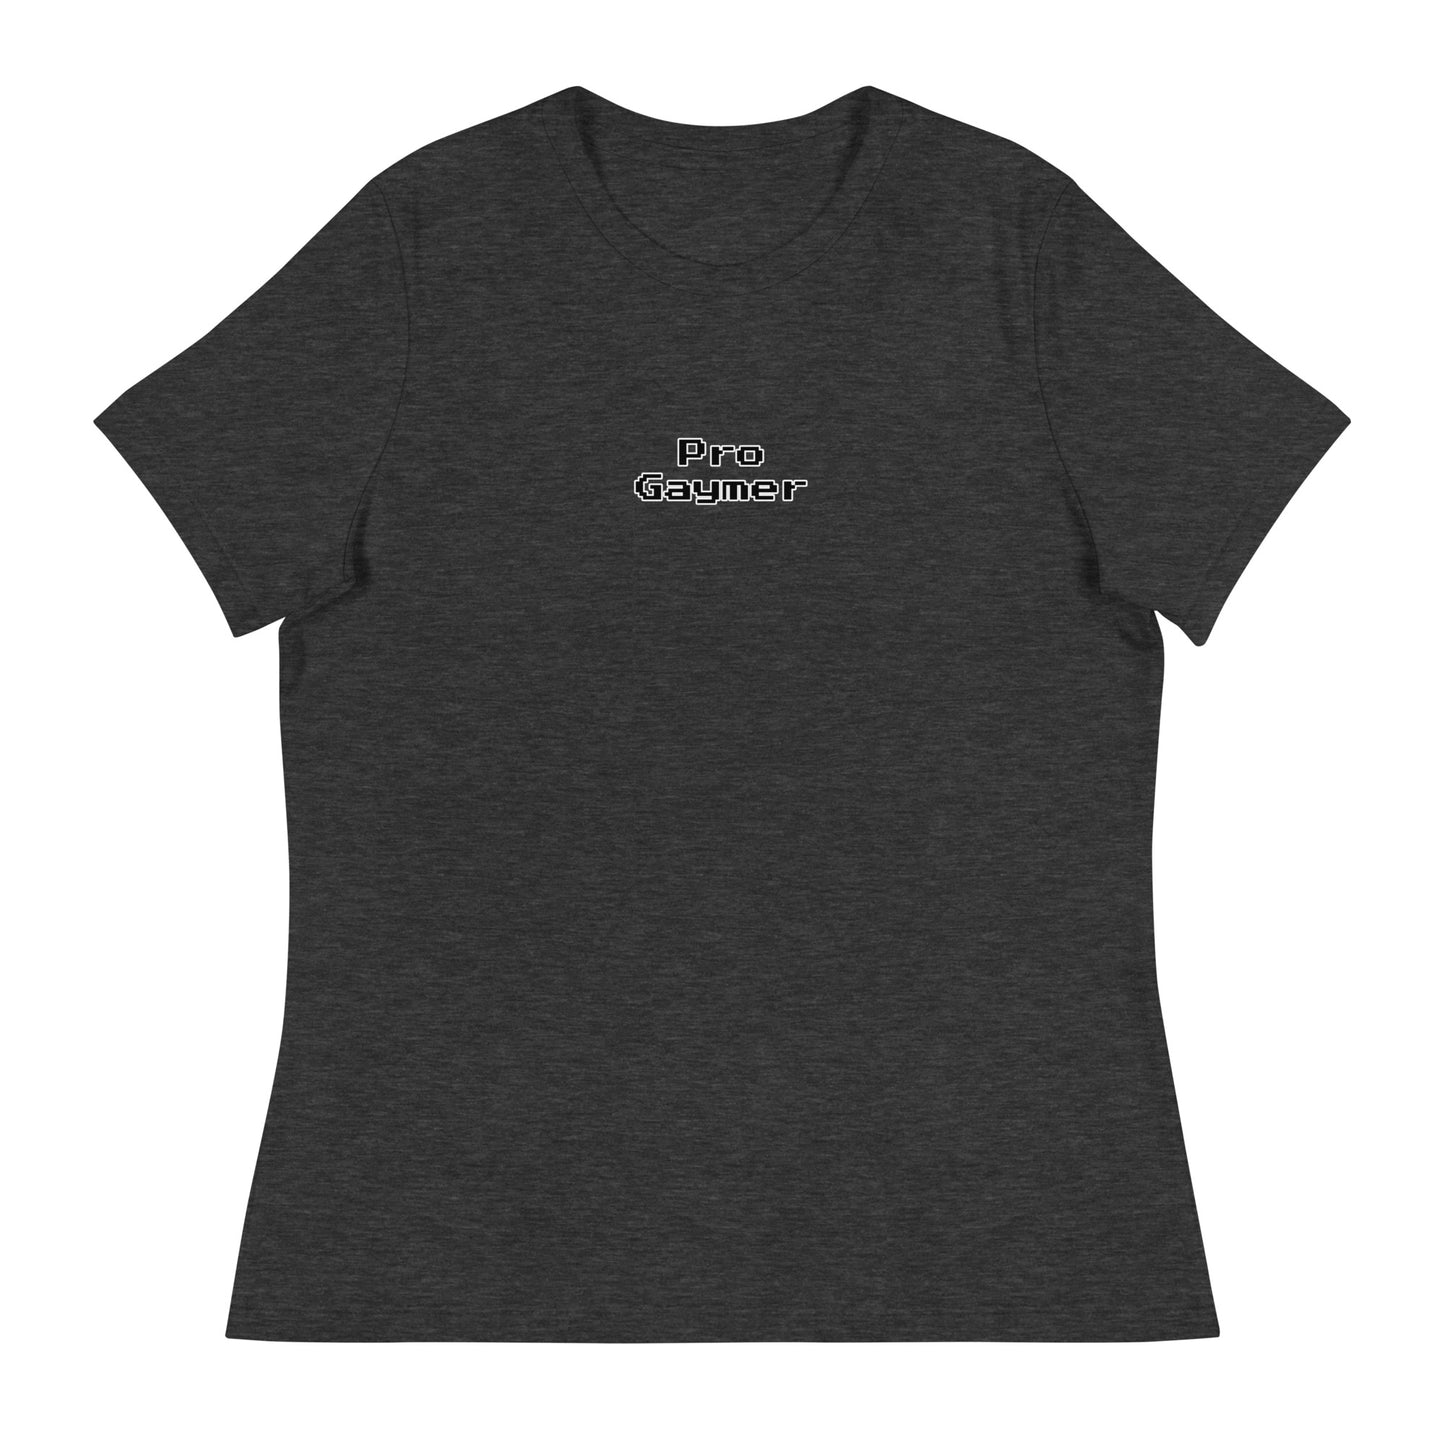 Pro Gaymer - Contoured, Relaxed T-Shirt (B)